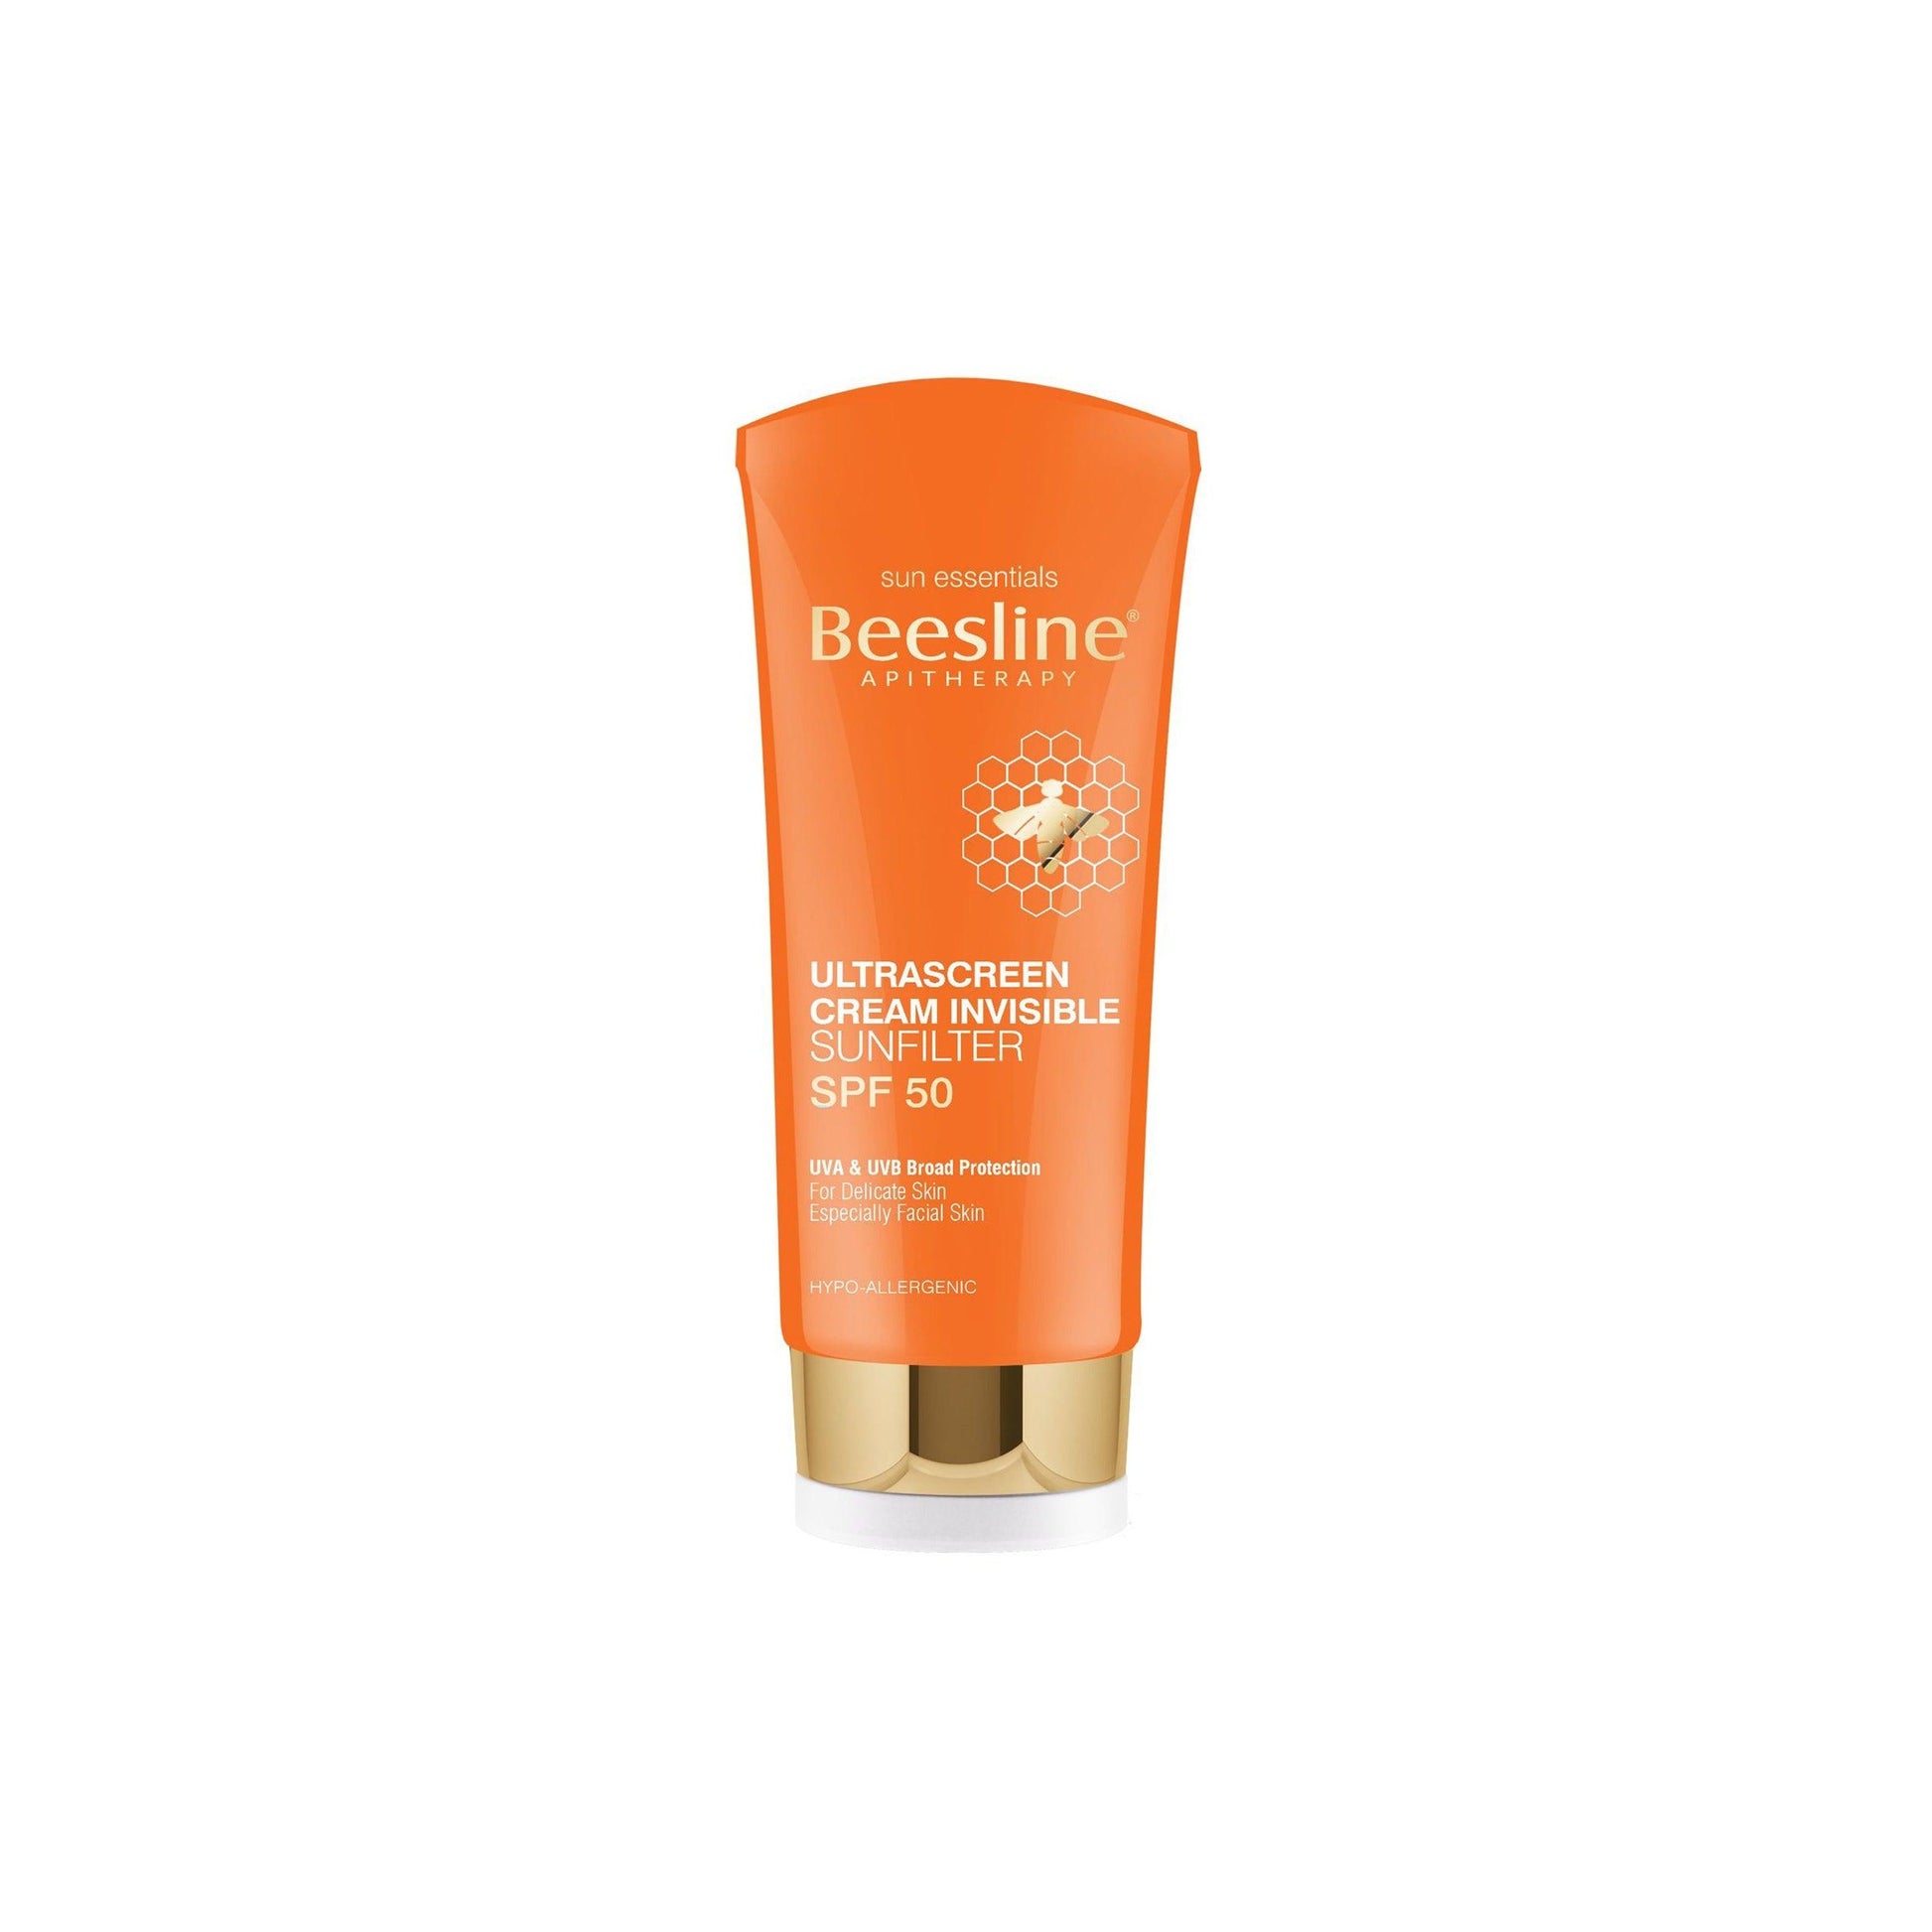 Beesline Ultrascreen Cream Invisible sunfilter SPF 50 - Beauty Bounty